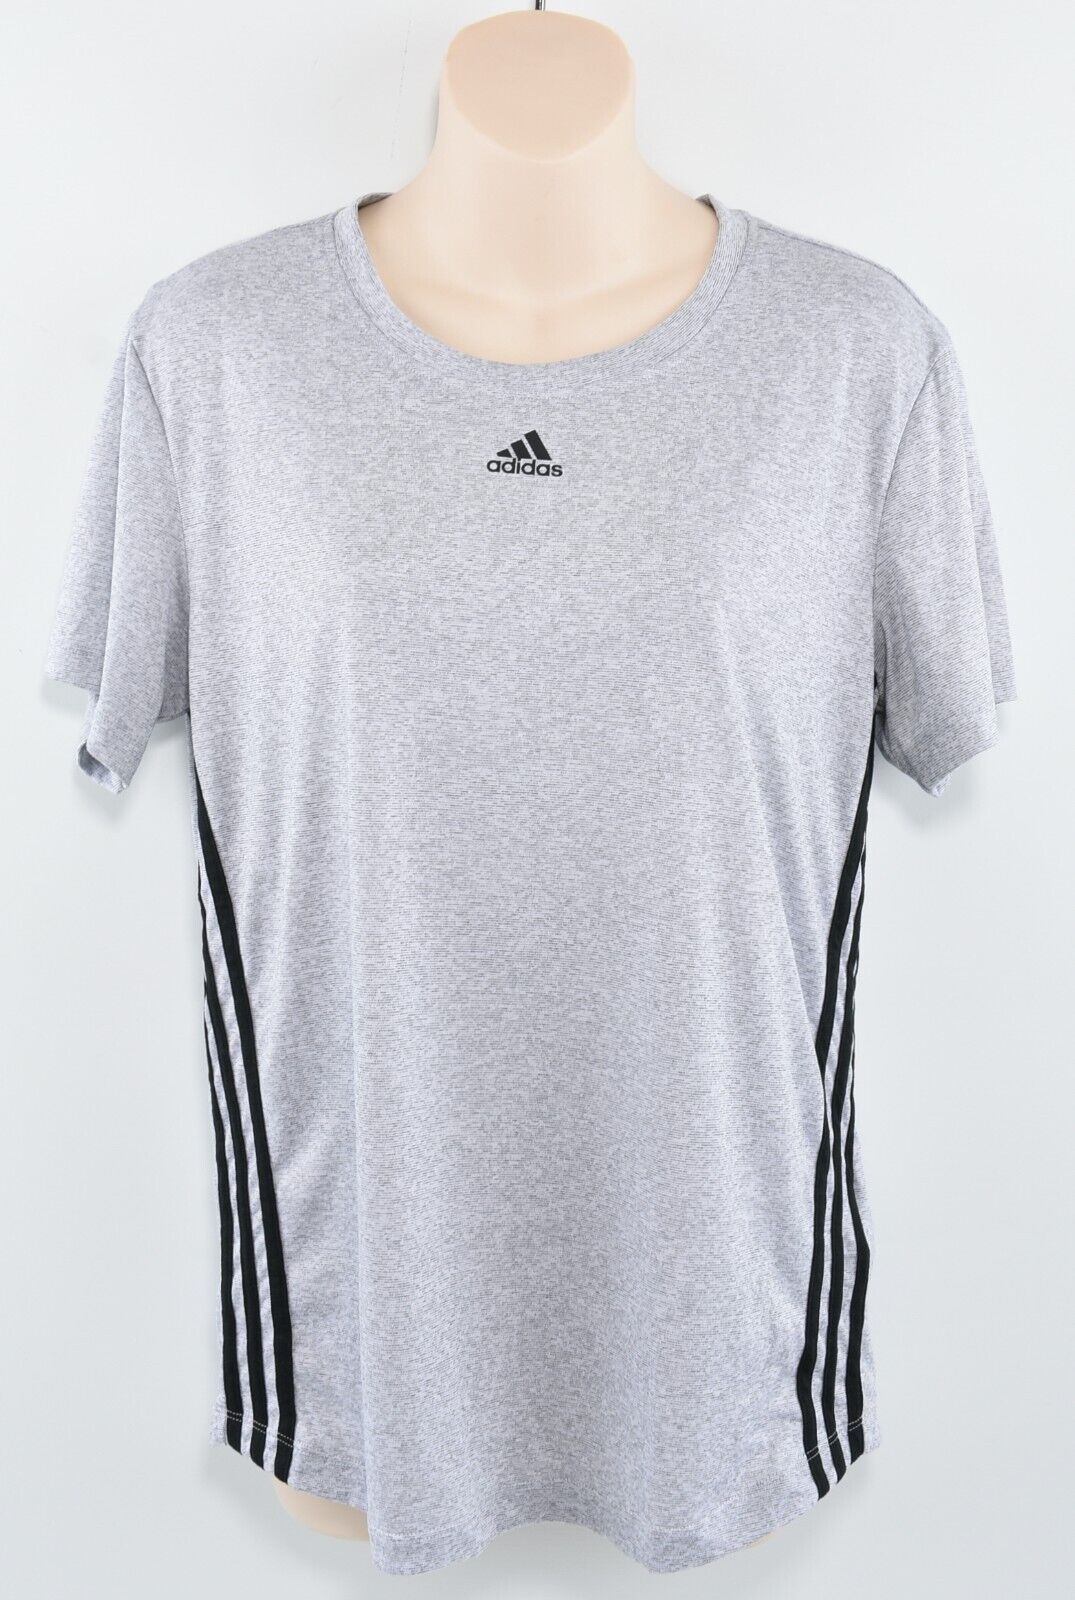 ADIDAS Performance Women's 3-Stripe T-shirt, White/Black, size XS /UK 4-6